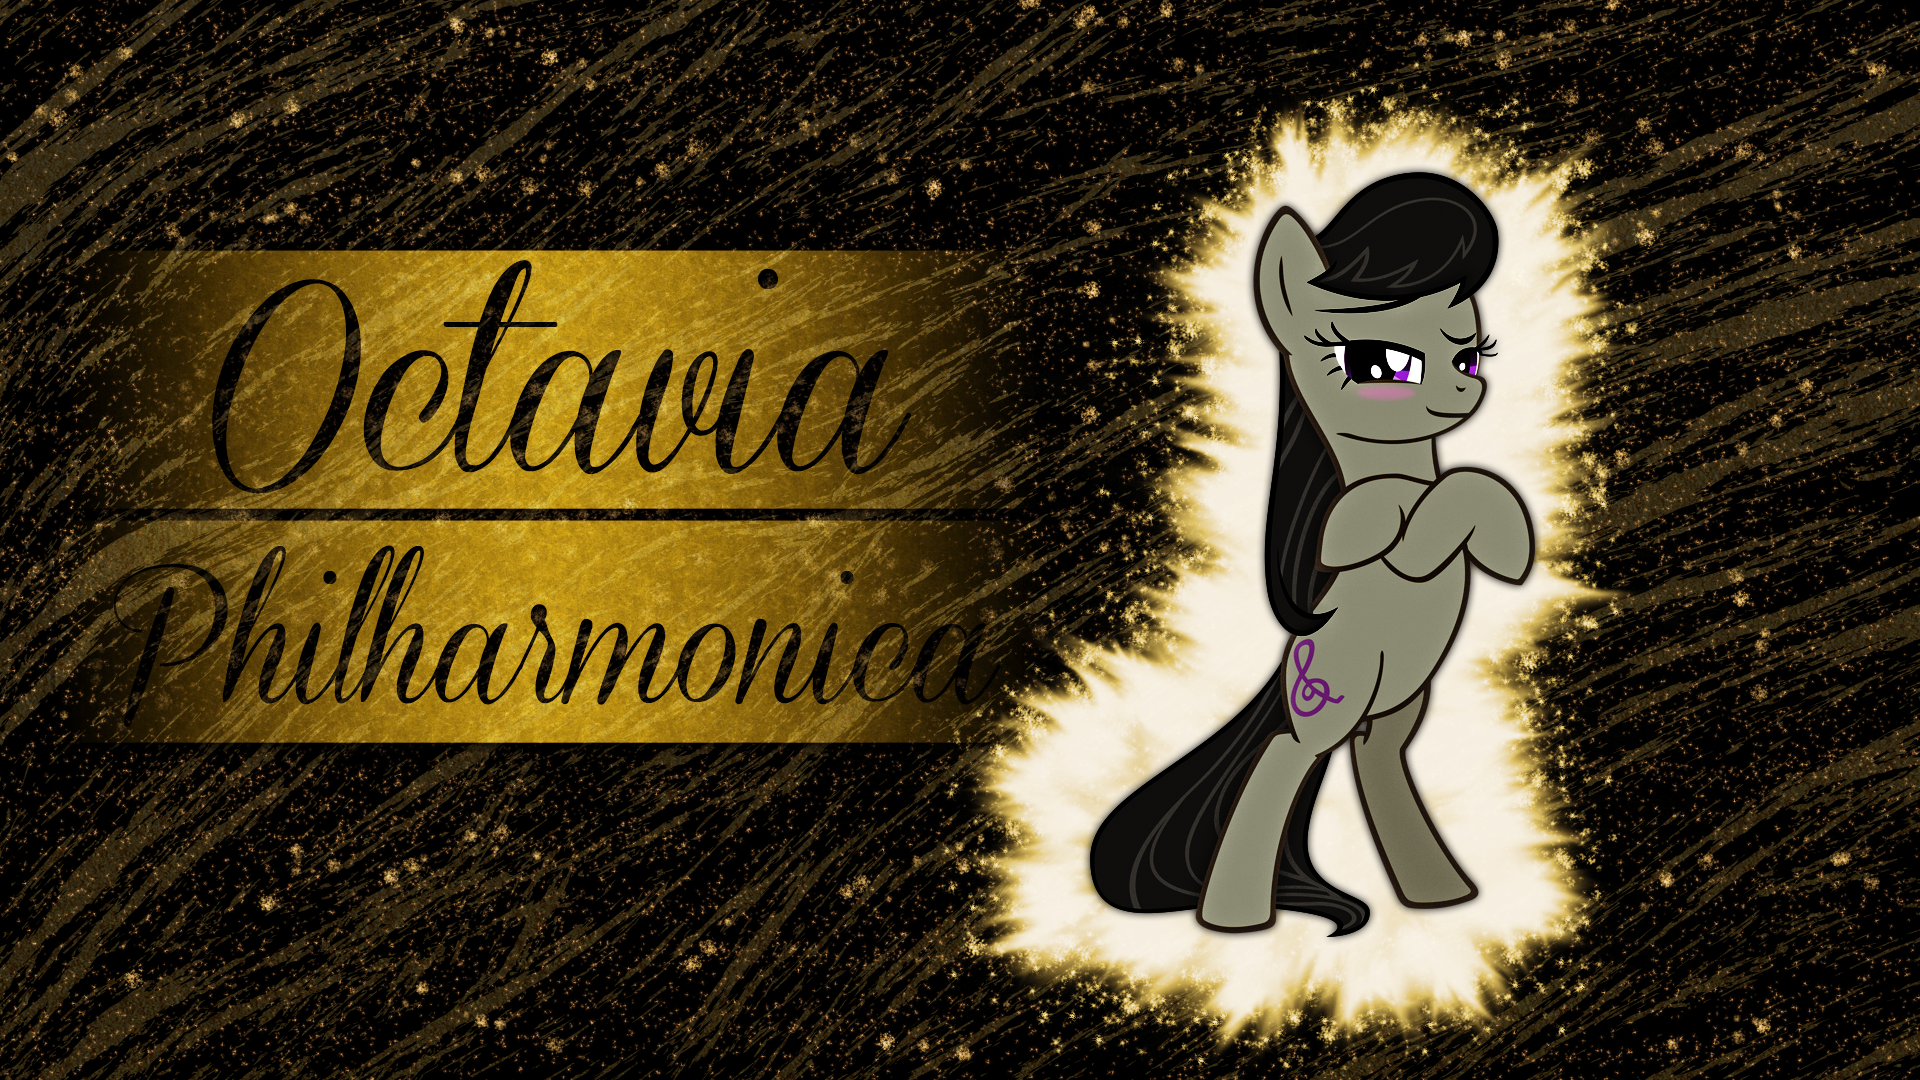 Octavia Philharmonica by EmbersAtDawn